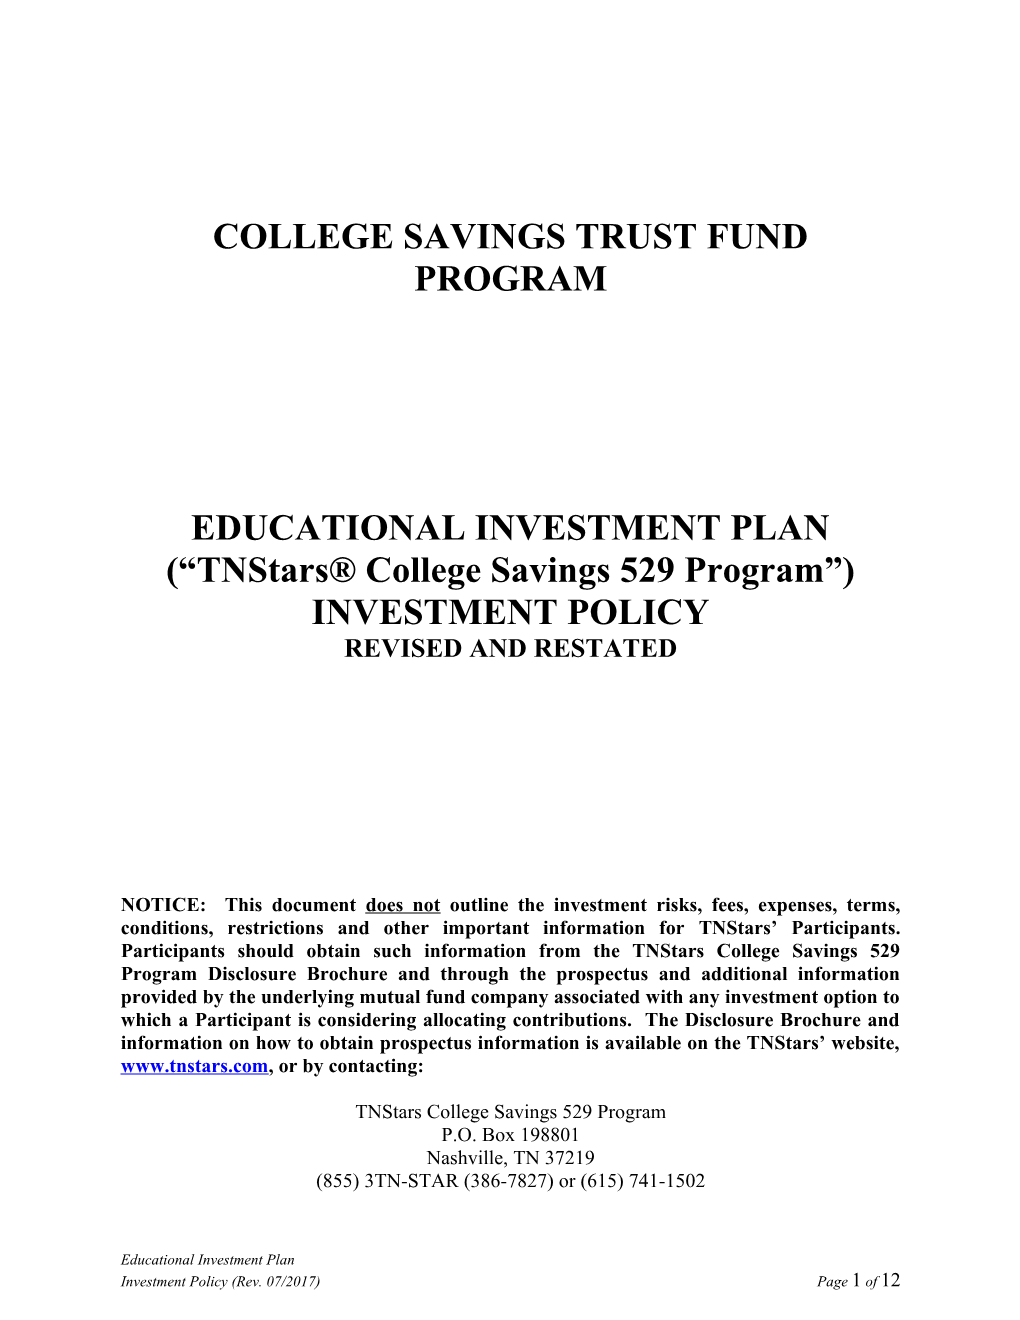 College Savings Trust Fund Program